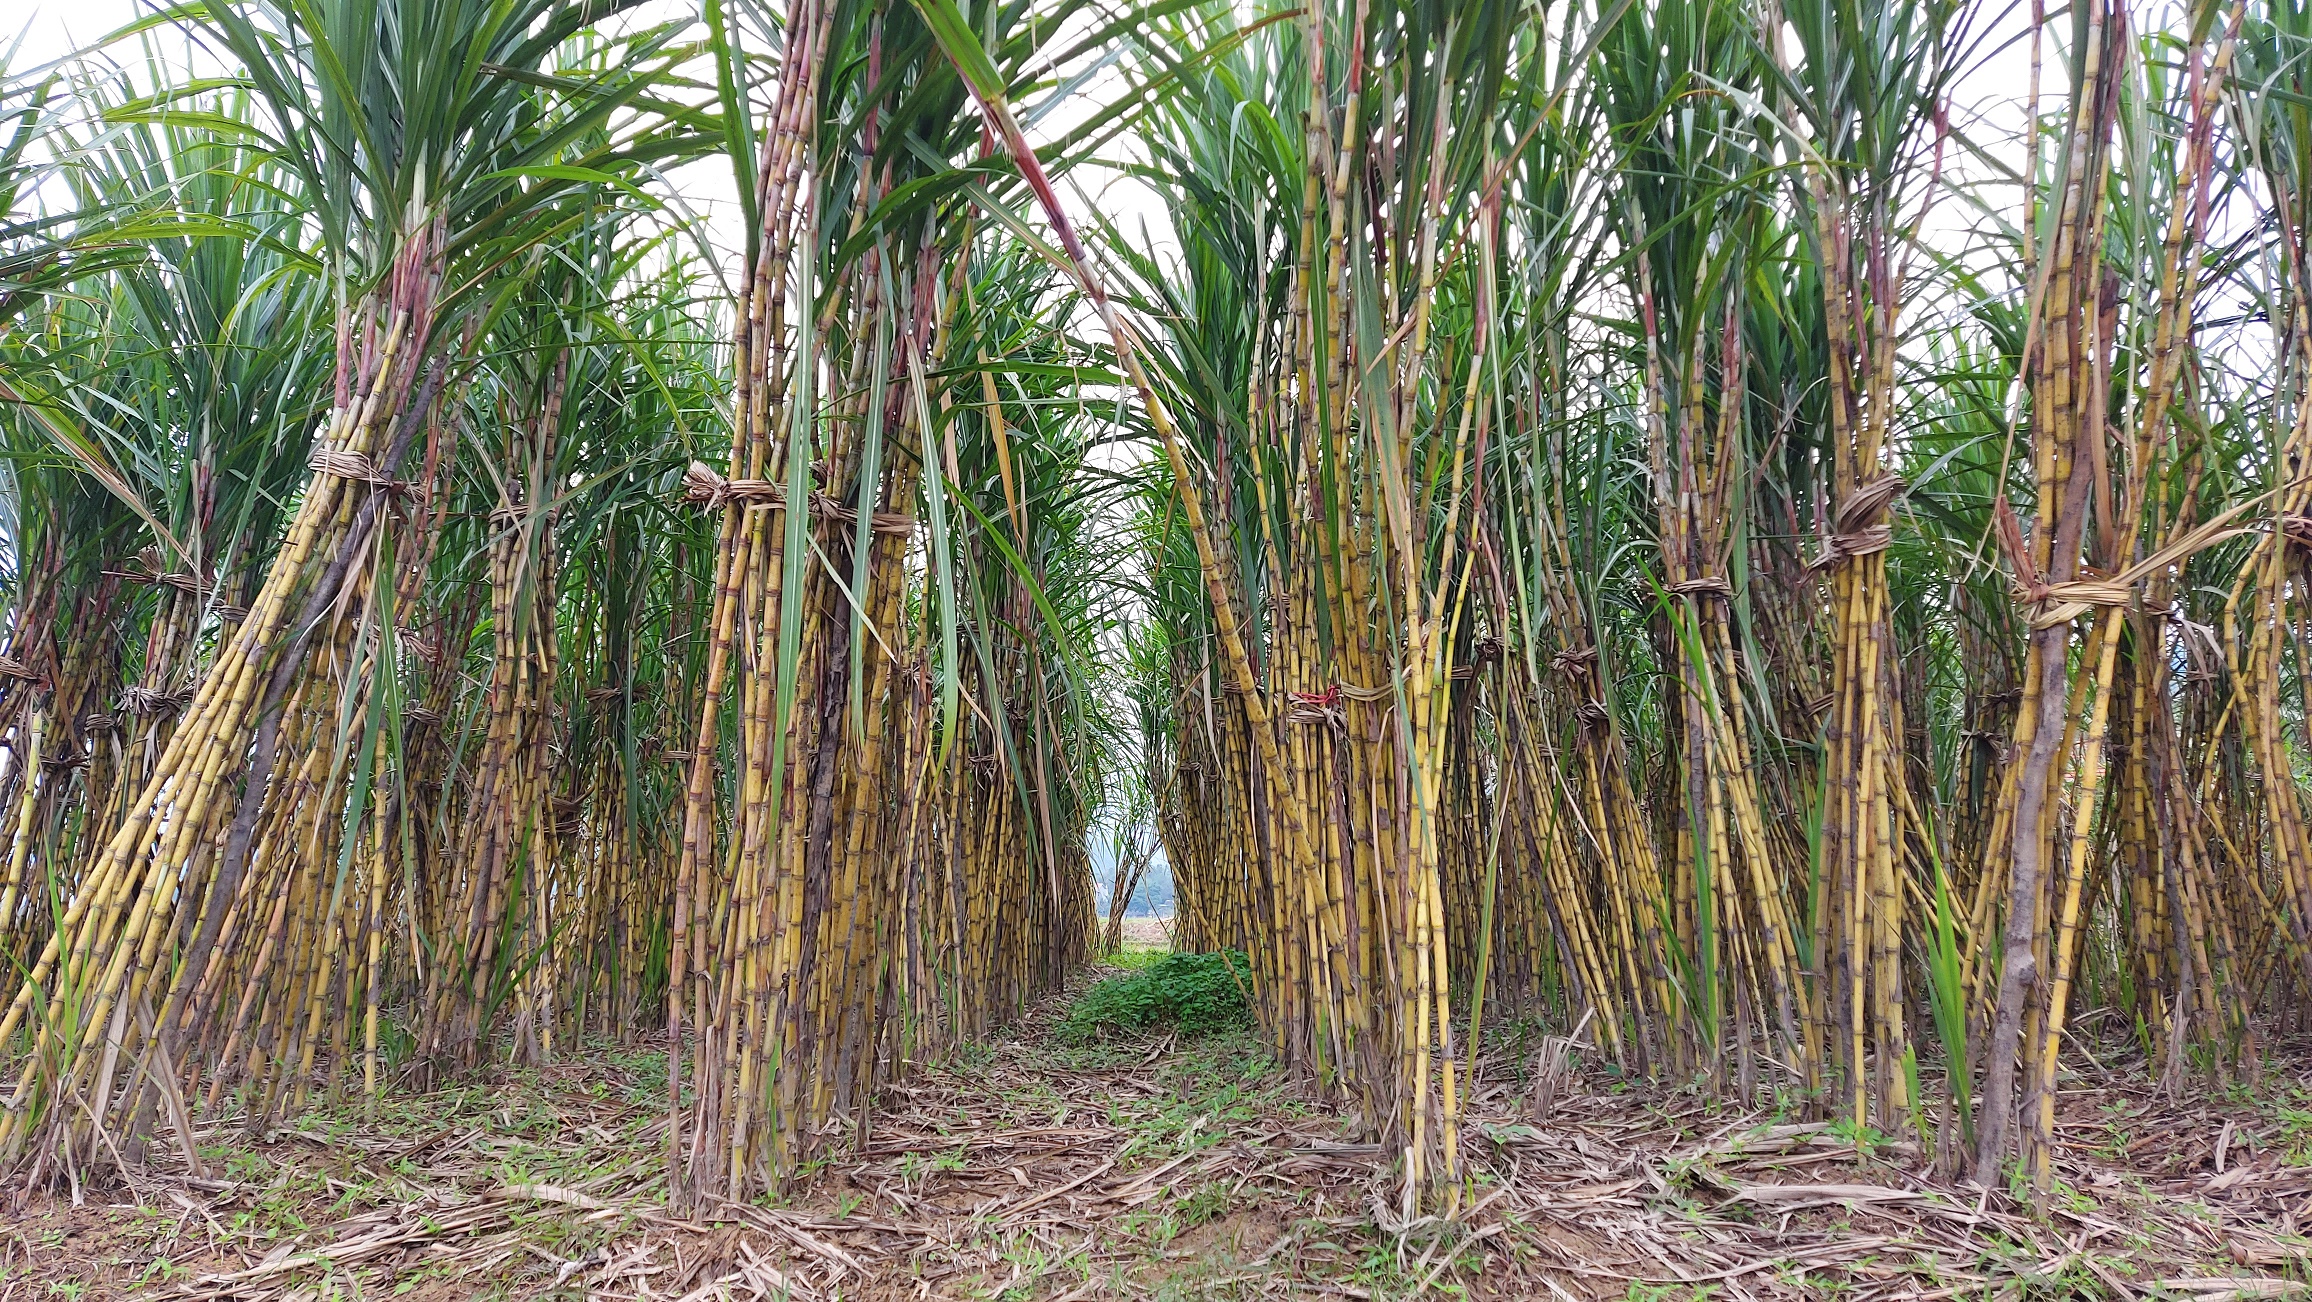 Tan Gia Thanh raw sugarcane farm in Viet Nam